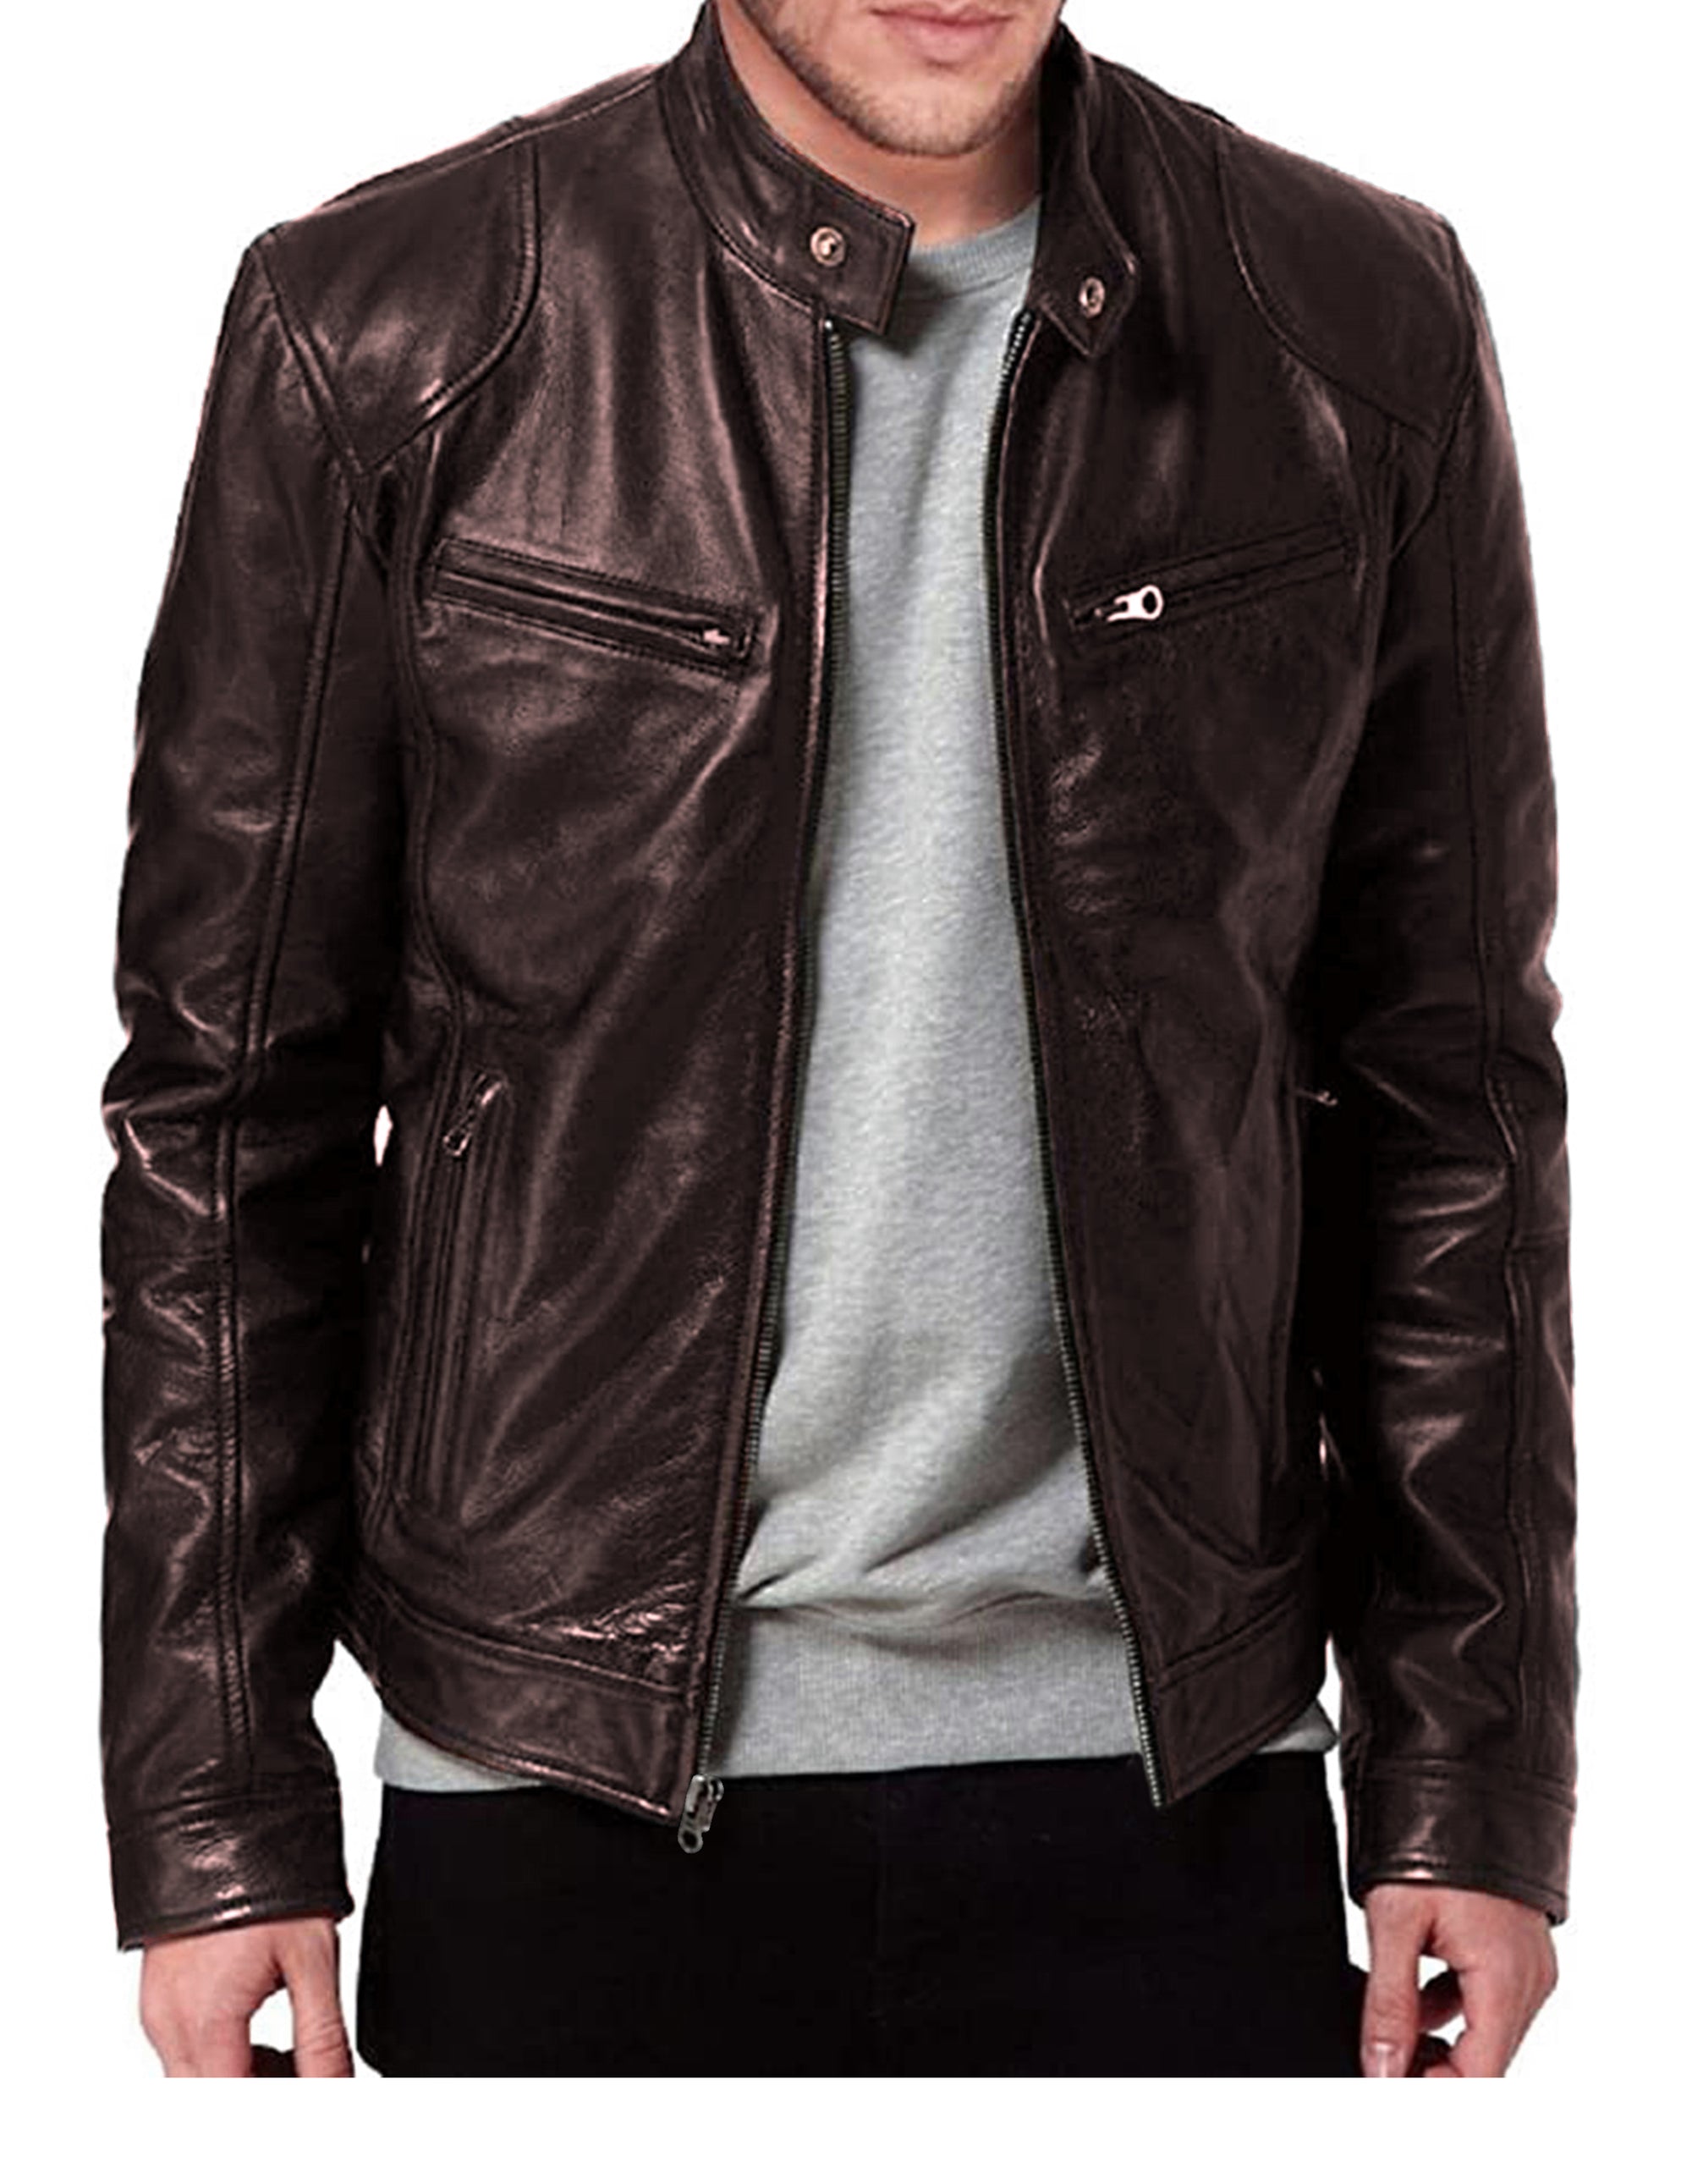 Brown Leather Jacket Men